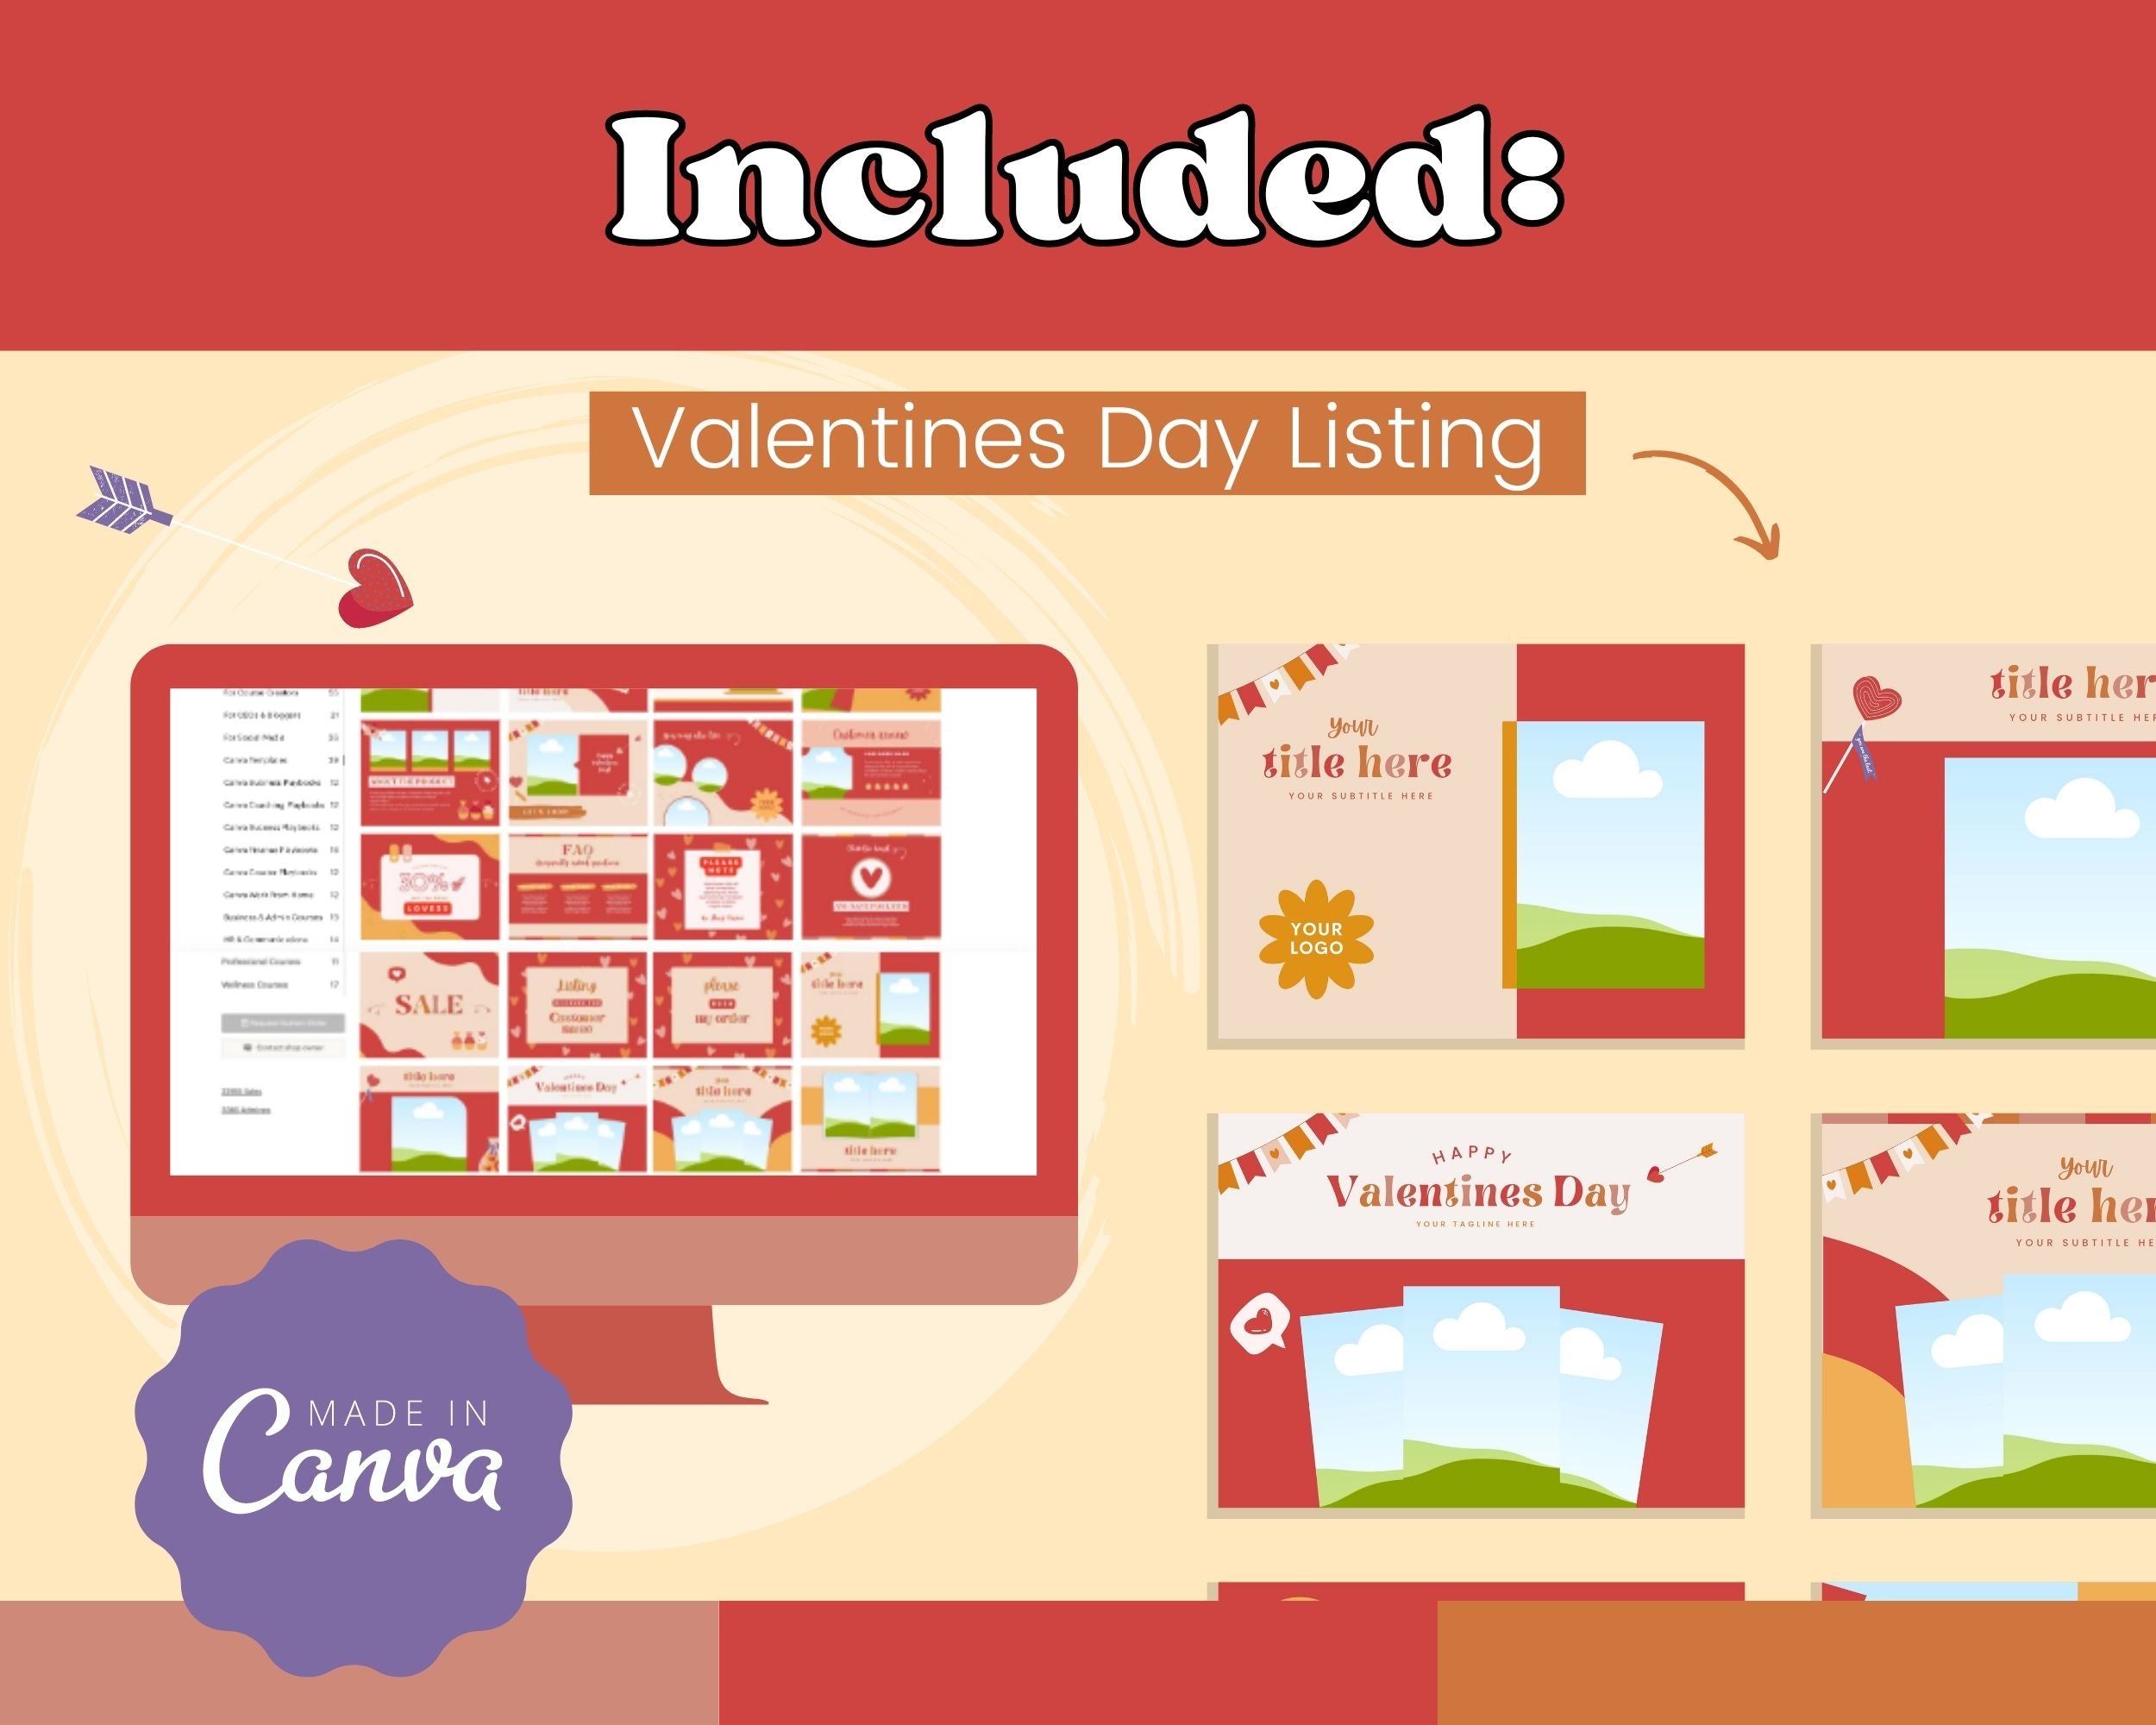 Valentines Day Etsy Shop Banner Kit | Etsy Banner Canva Templates | Etsy Store Listing Design | Bright Etsy Branding | Etsy Success Kit